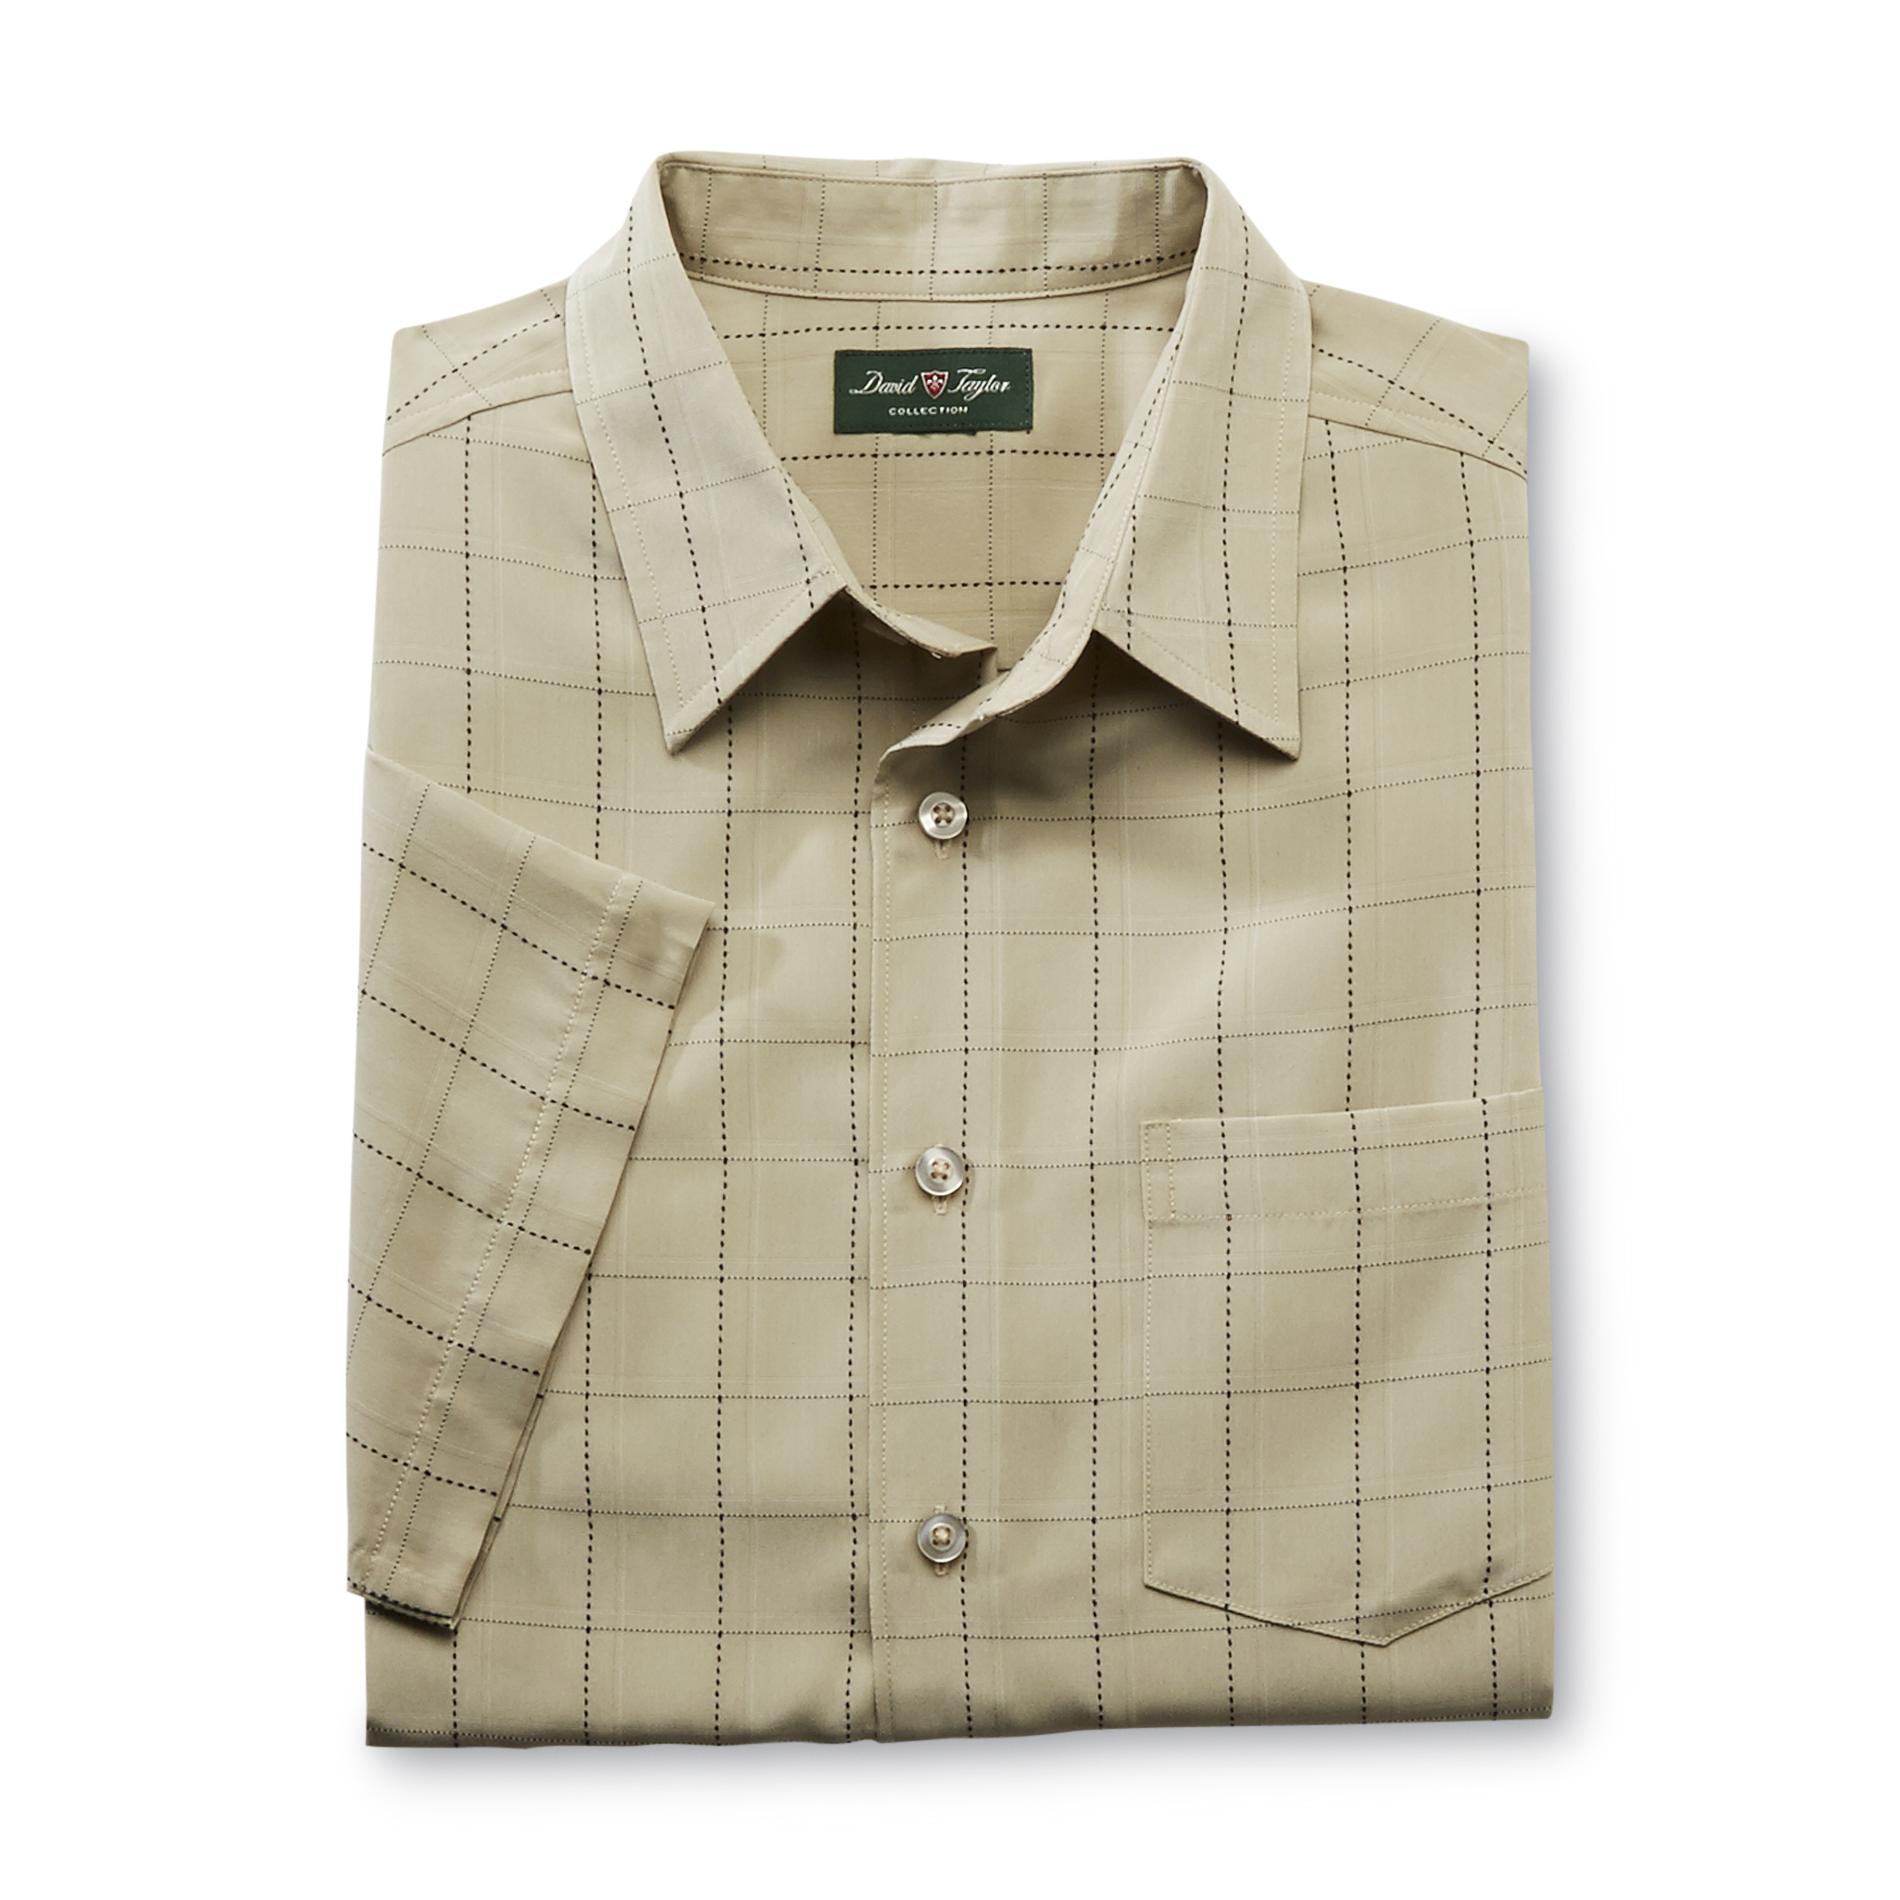 David Taylor Collection Men's Short-Sleeve Dress Shirt - Check